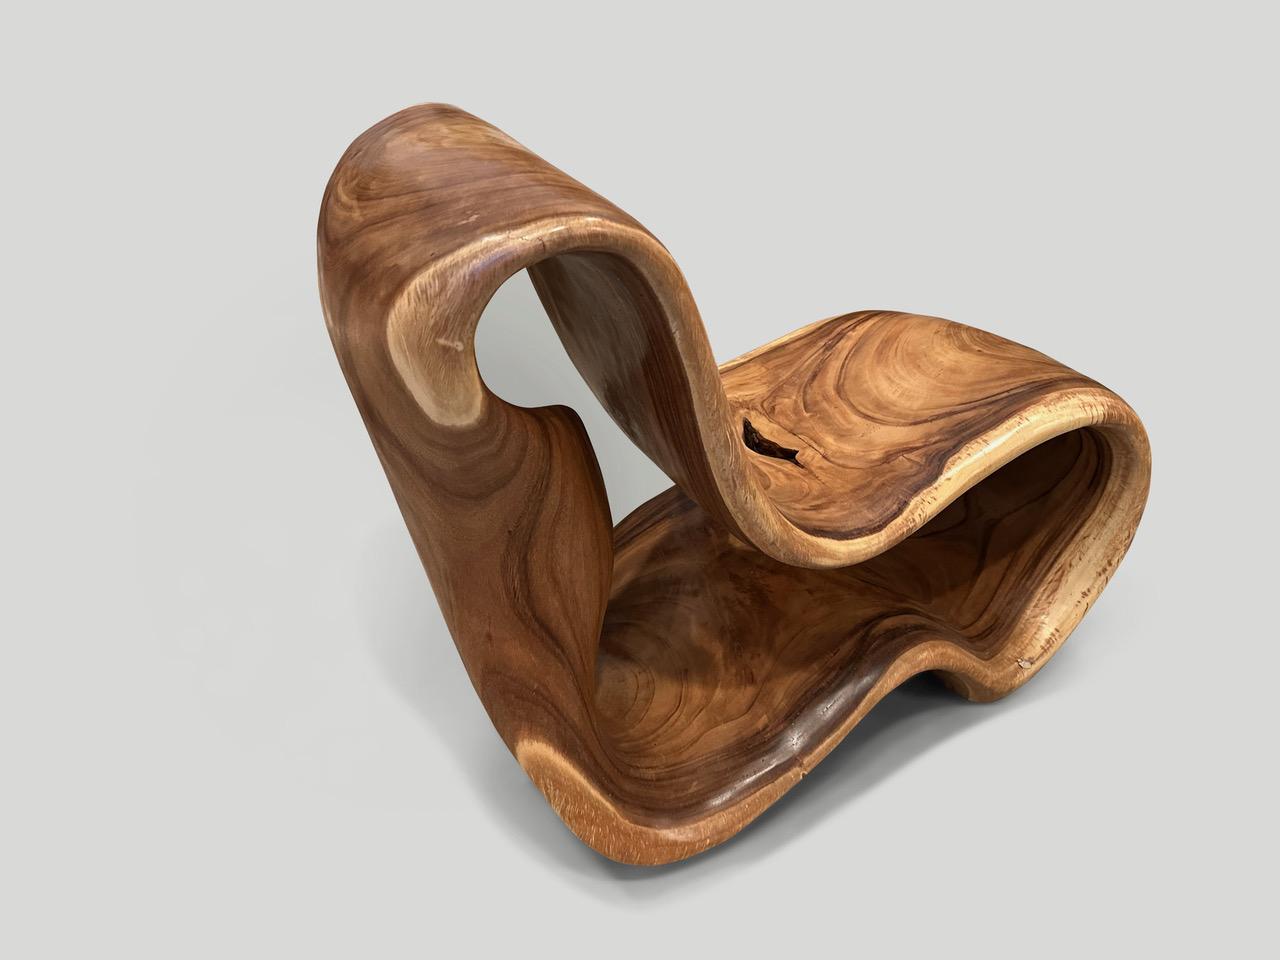 Organic Modern Andrianna Shamaris Impressive Soar Wood Sculptural Chair  For Sale